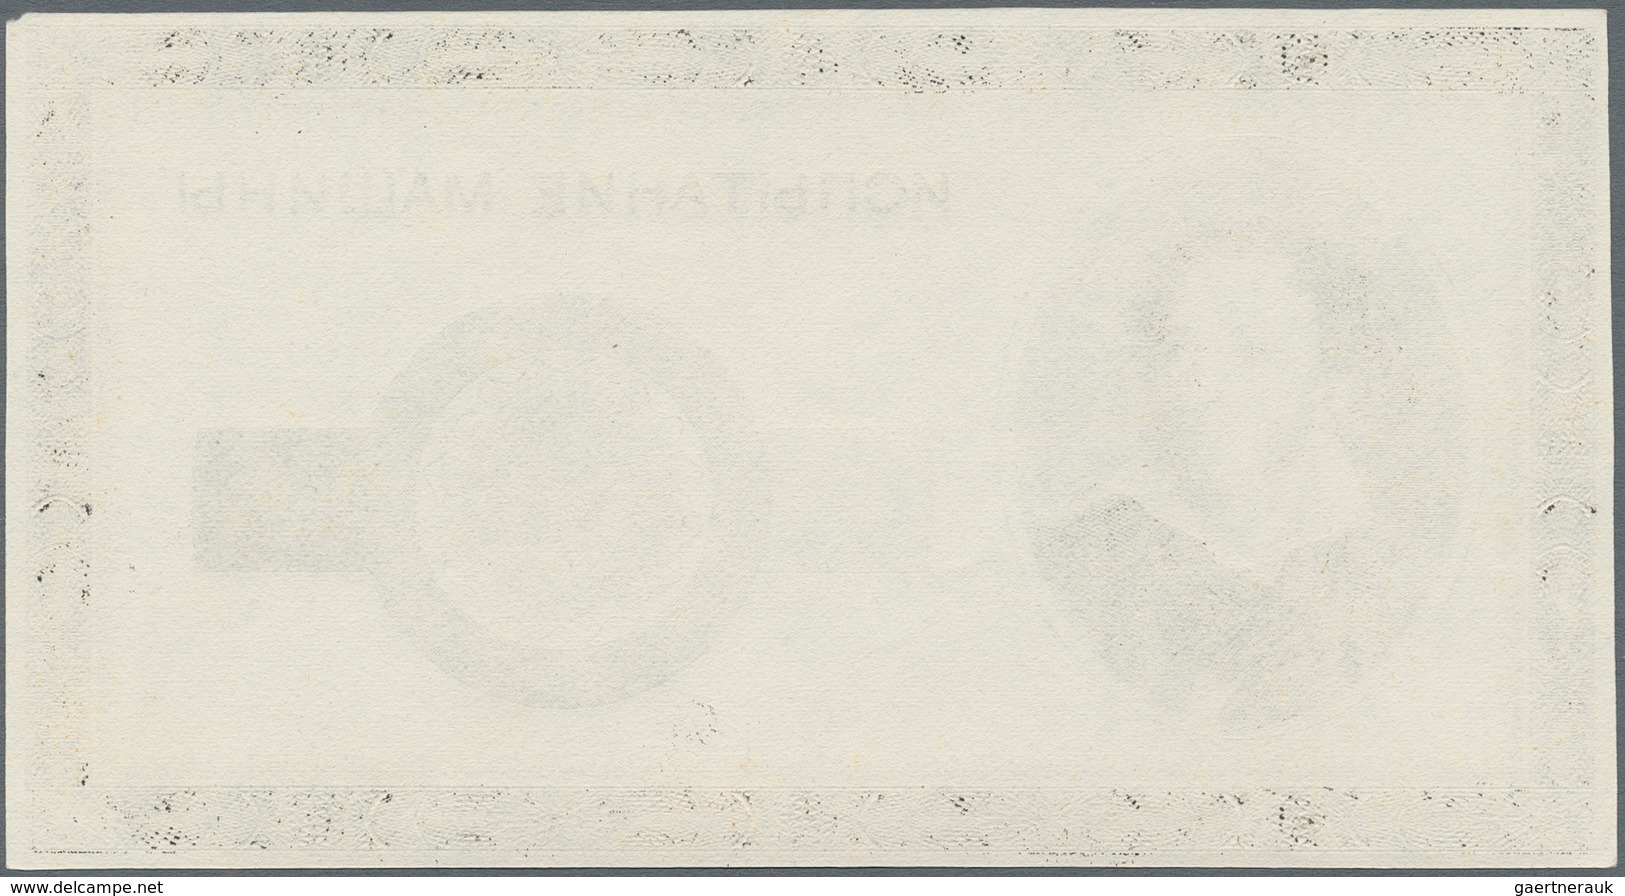 Testbanknoten: Intaglio Printed Test Note With Portrait Of Alexander Pushkin And Text "испытание маш - Fiktive & Specimen